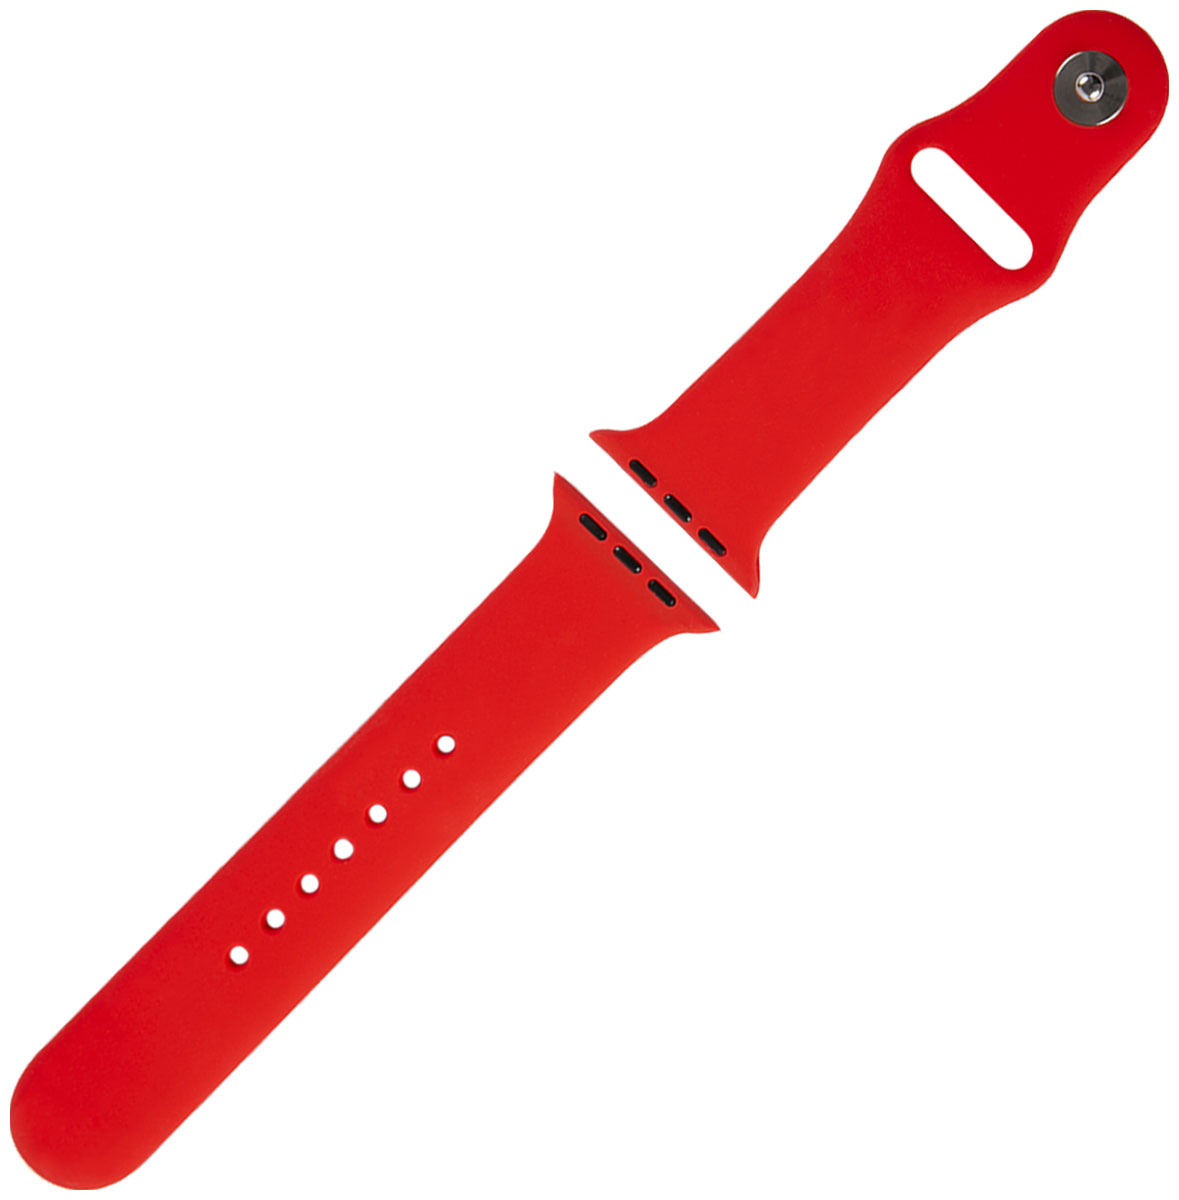 Ремешок силиконовый Red Line для Apple Watch – 38/40 mm (S3/S4/S5/SE/S6), красный 2pc lot car rearview mirror stickers motorsport badge auto body styling stickers for audi s3 s4 s5 s6 c5 c6 b8 b6 q3 accessories